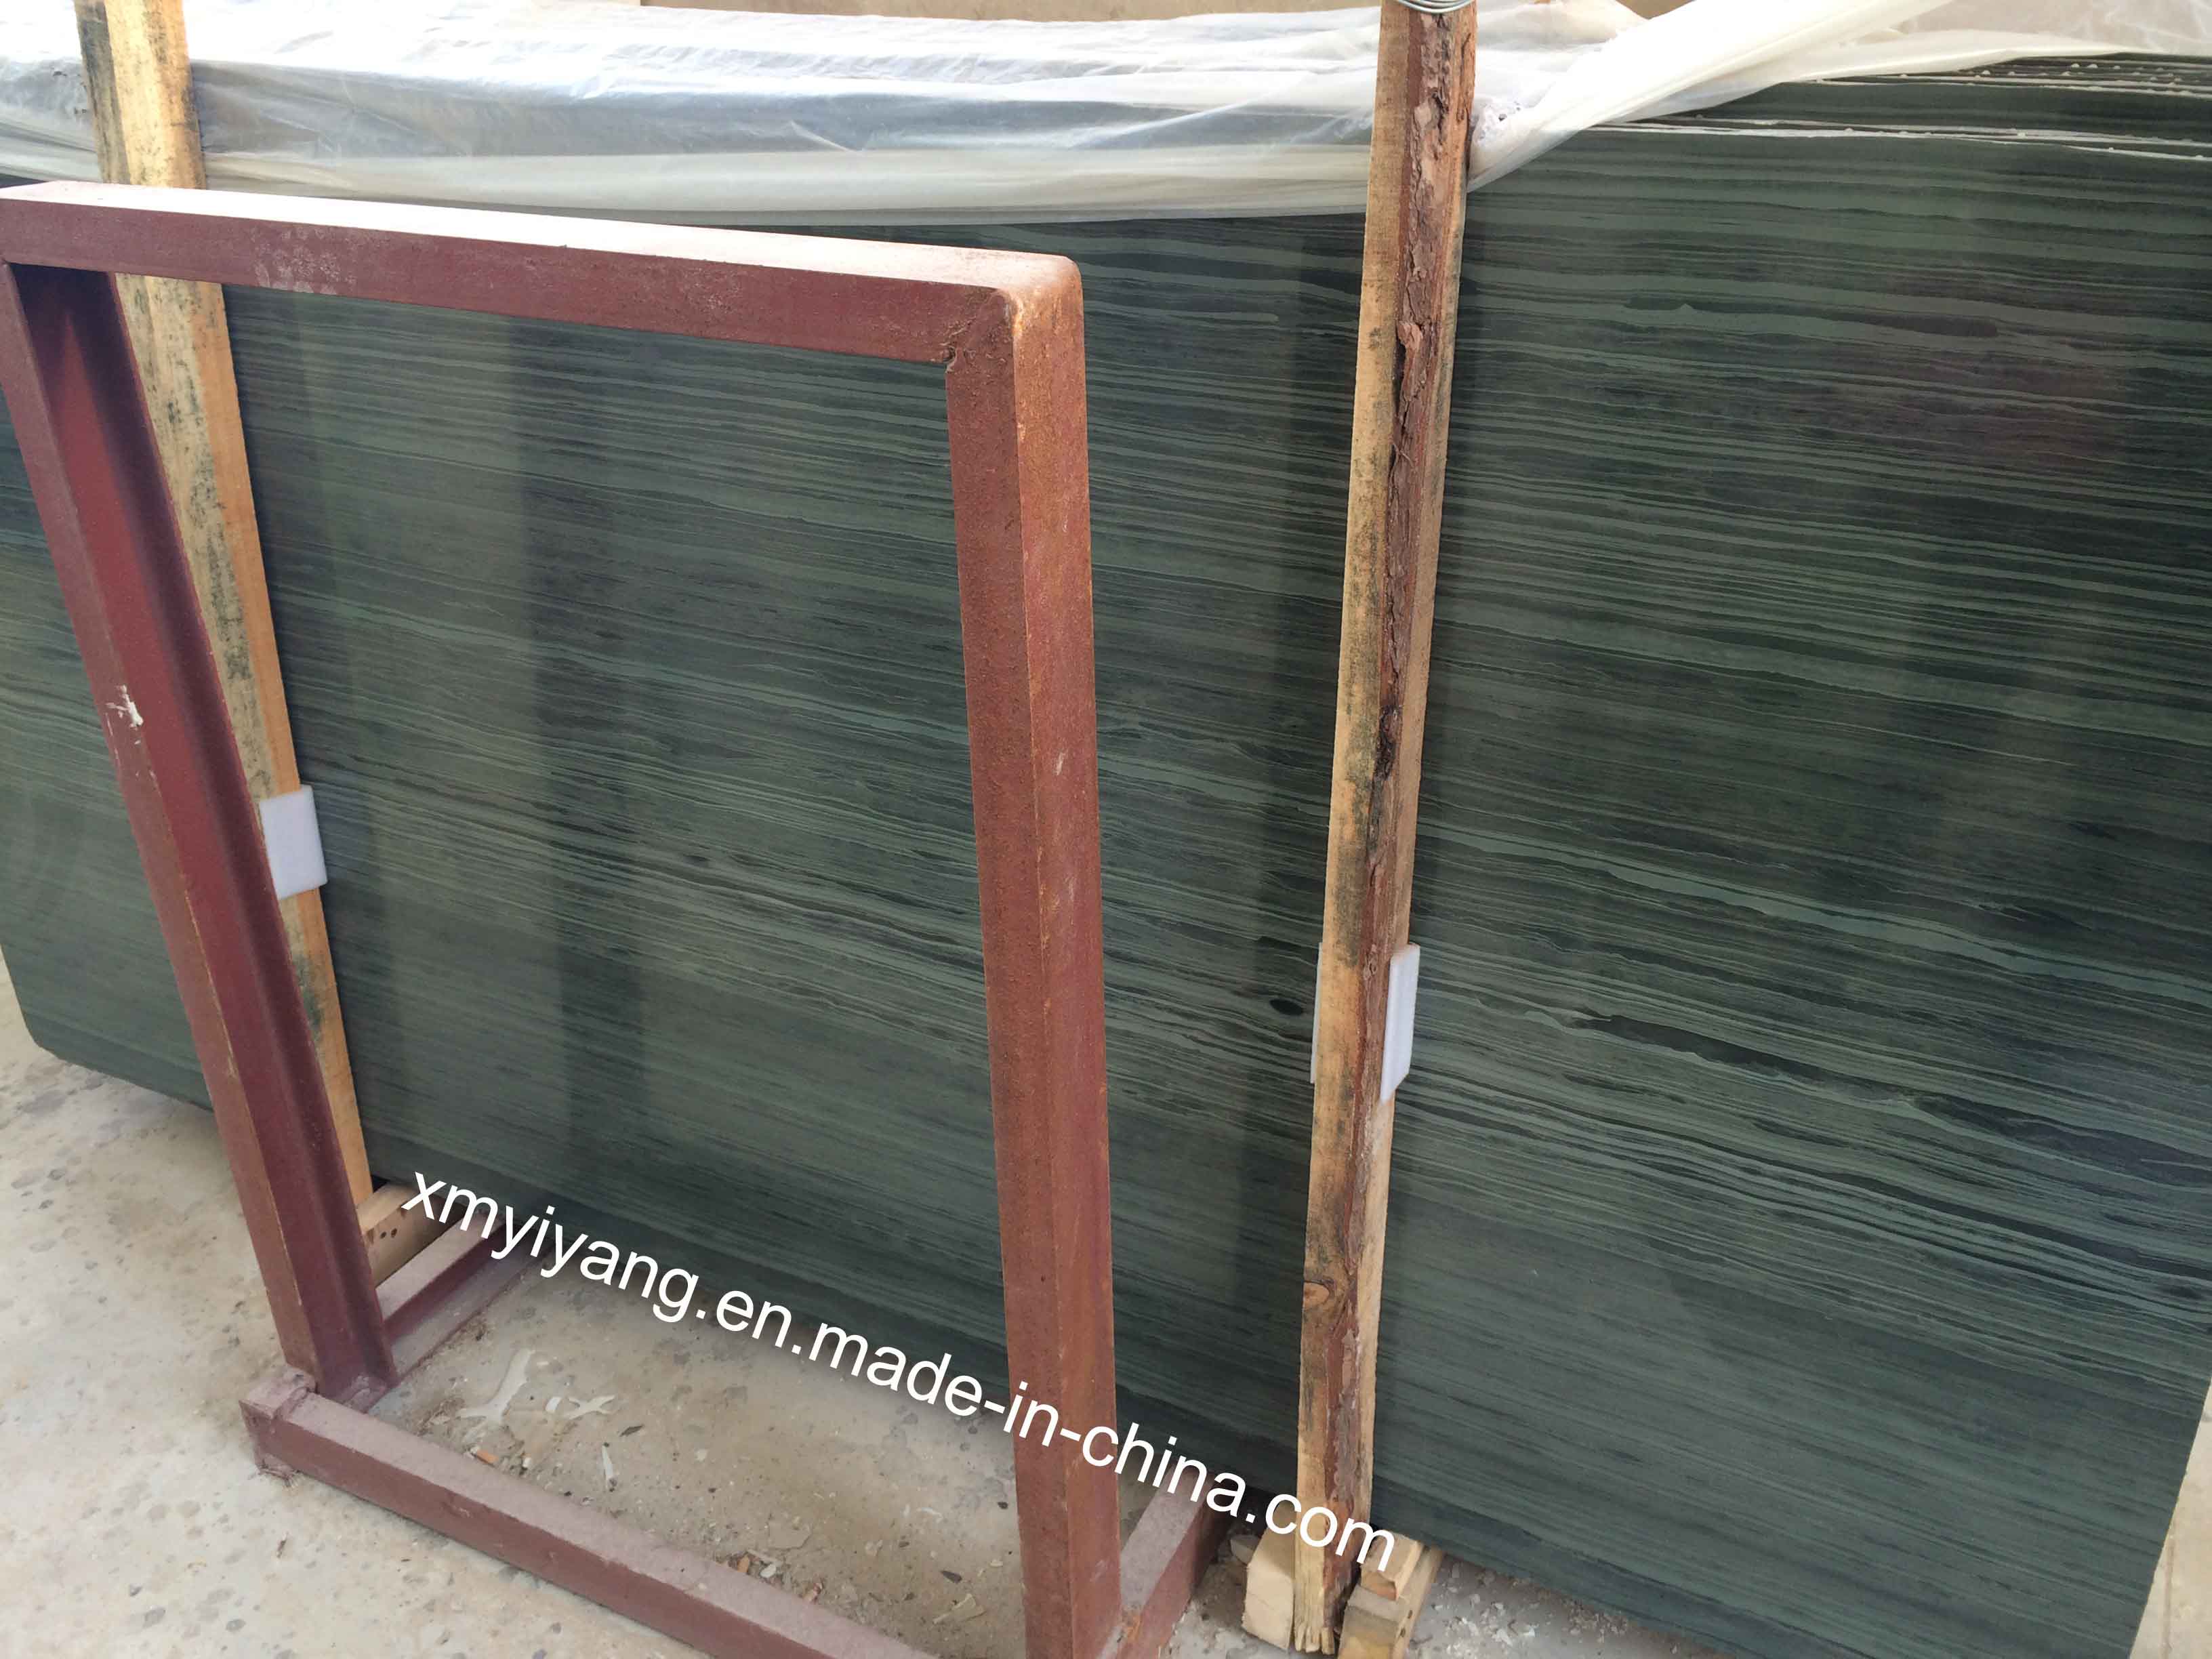 New China Green Marble-Aurora Wood/America Wooden Grain Marble Slab (YY-VNGWM)